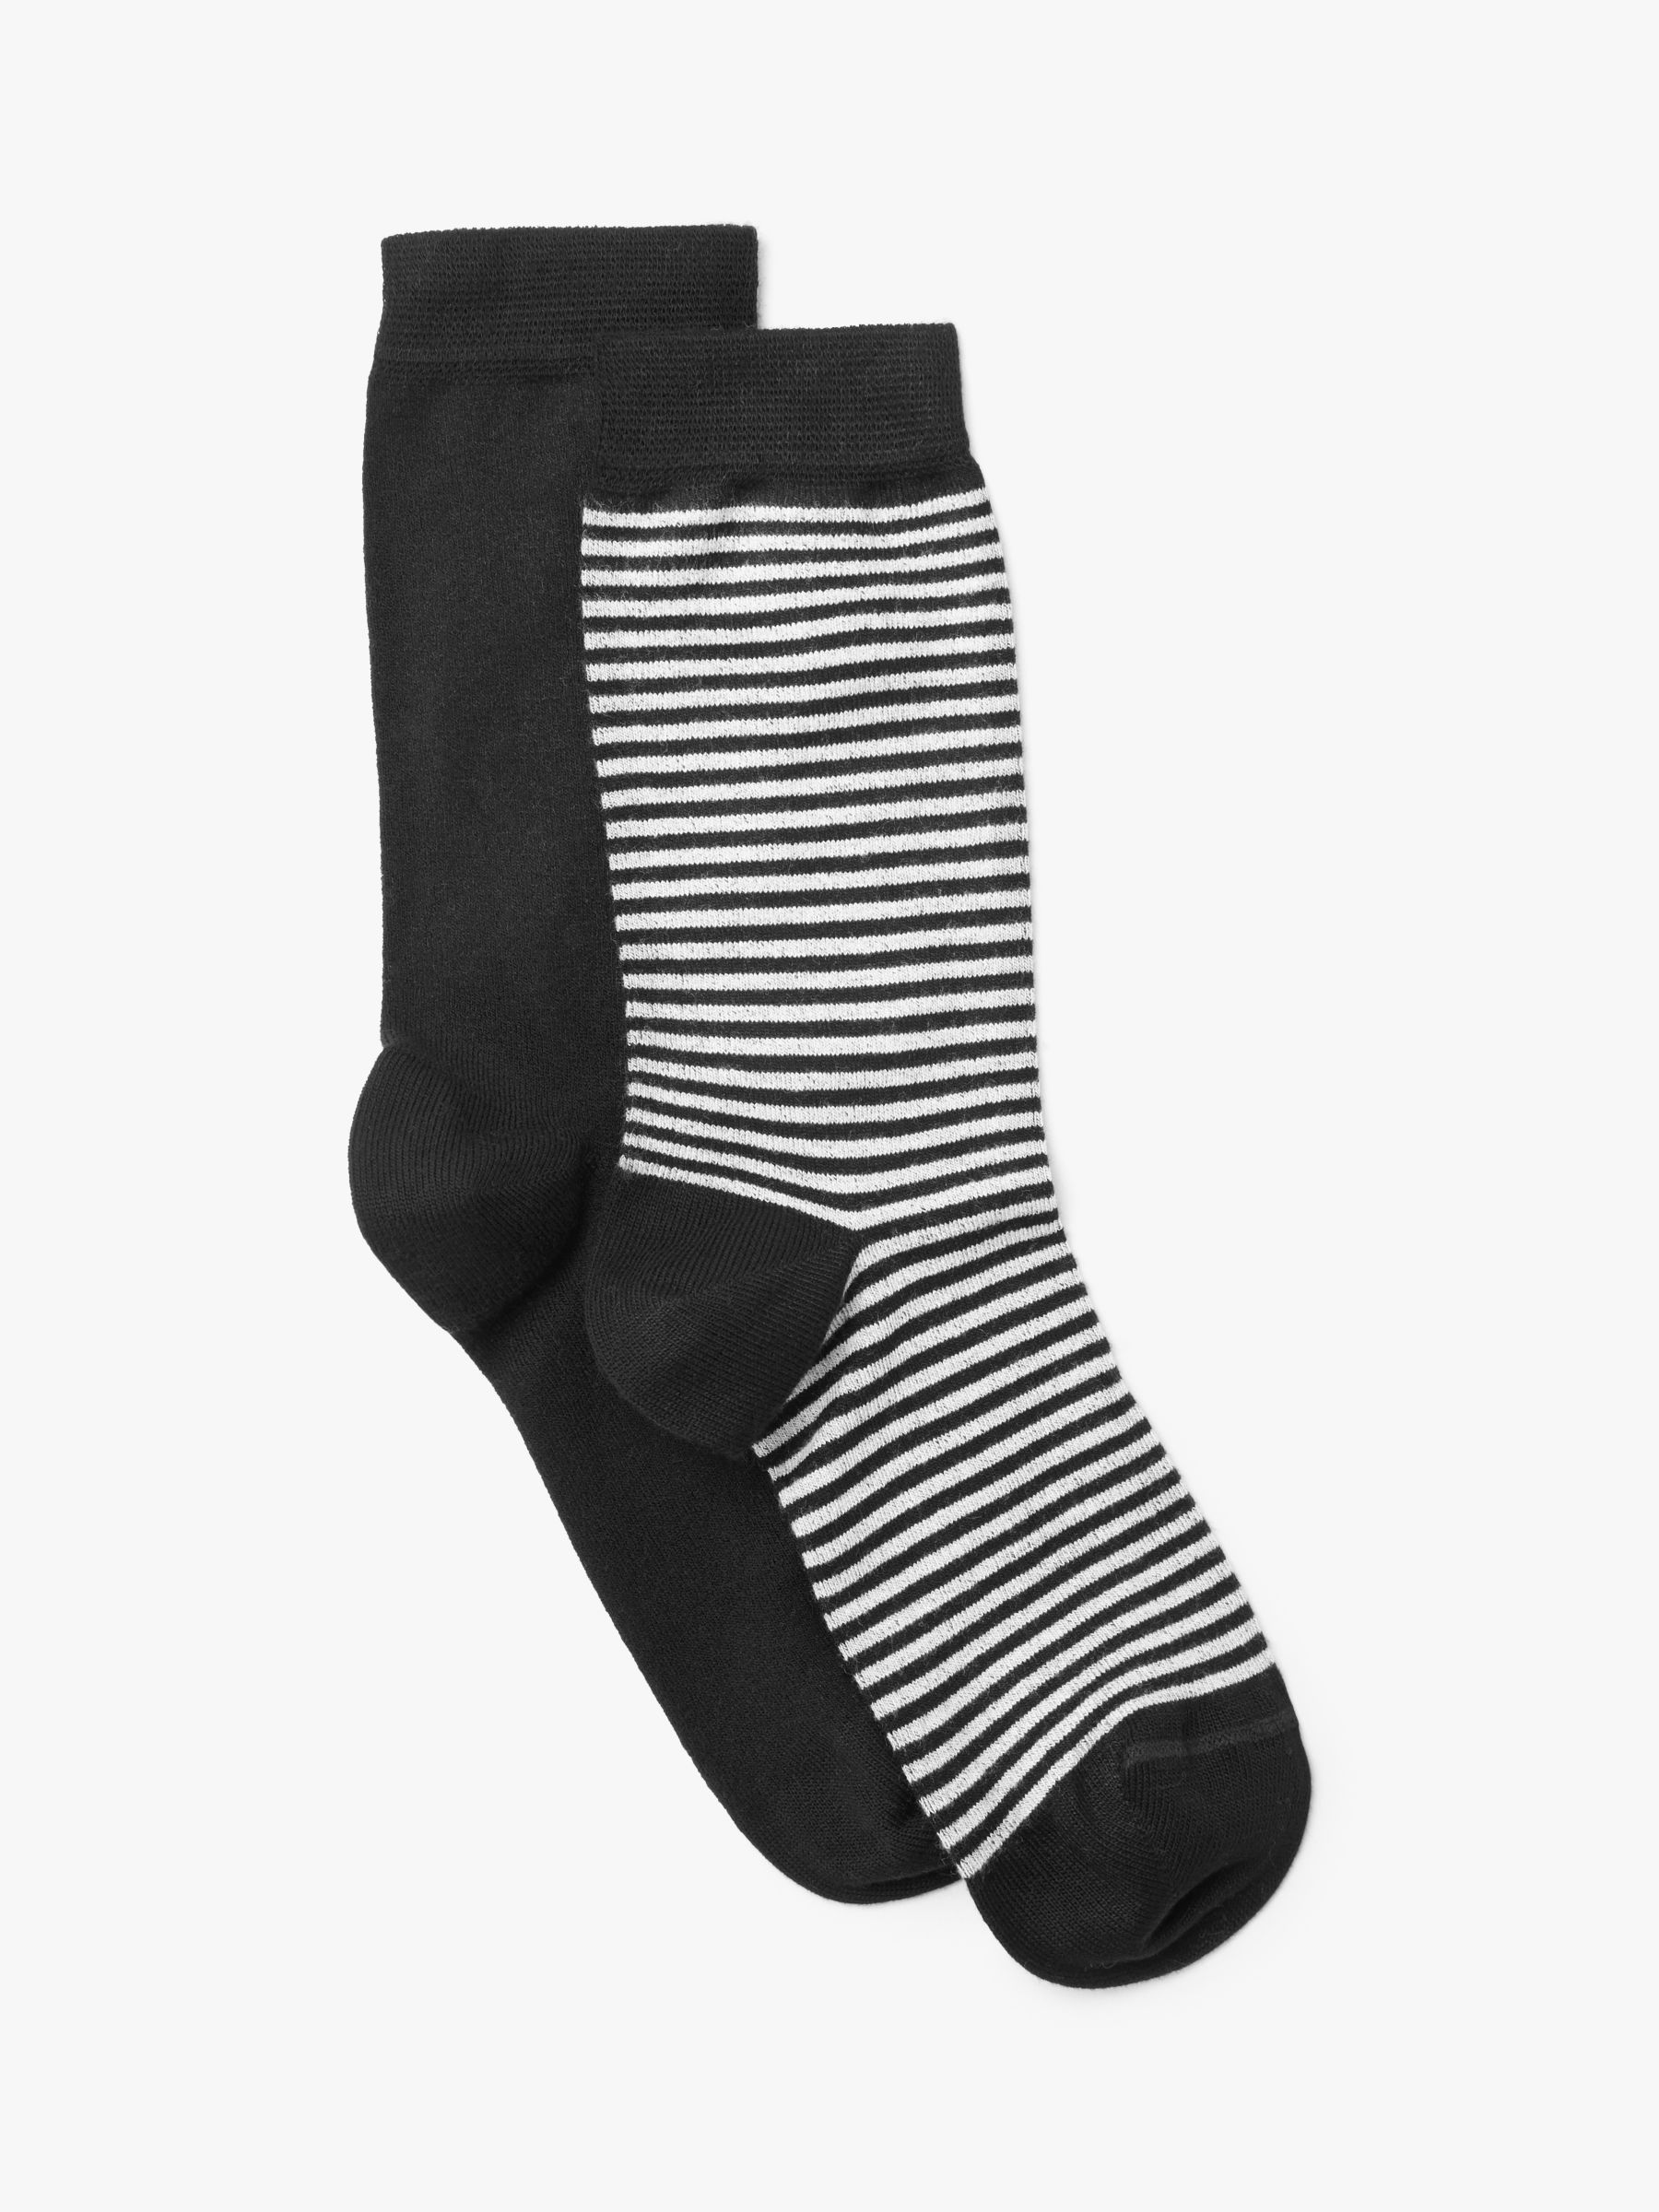 John Lewis Women's Feeder Stripe and Monochrome Wide-Fit Ankle Socks, Pack of 2, Black/Multi